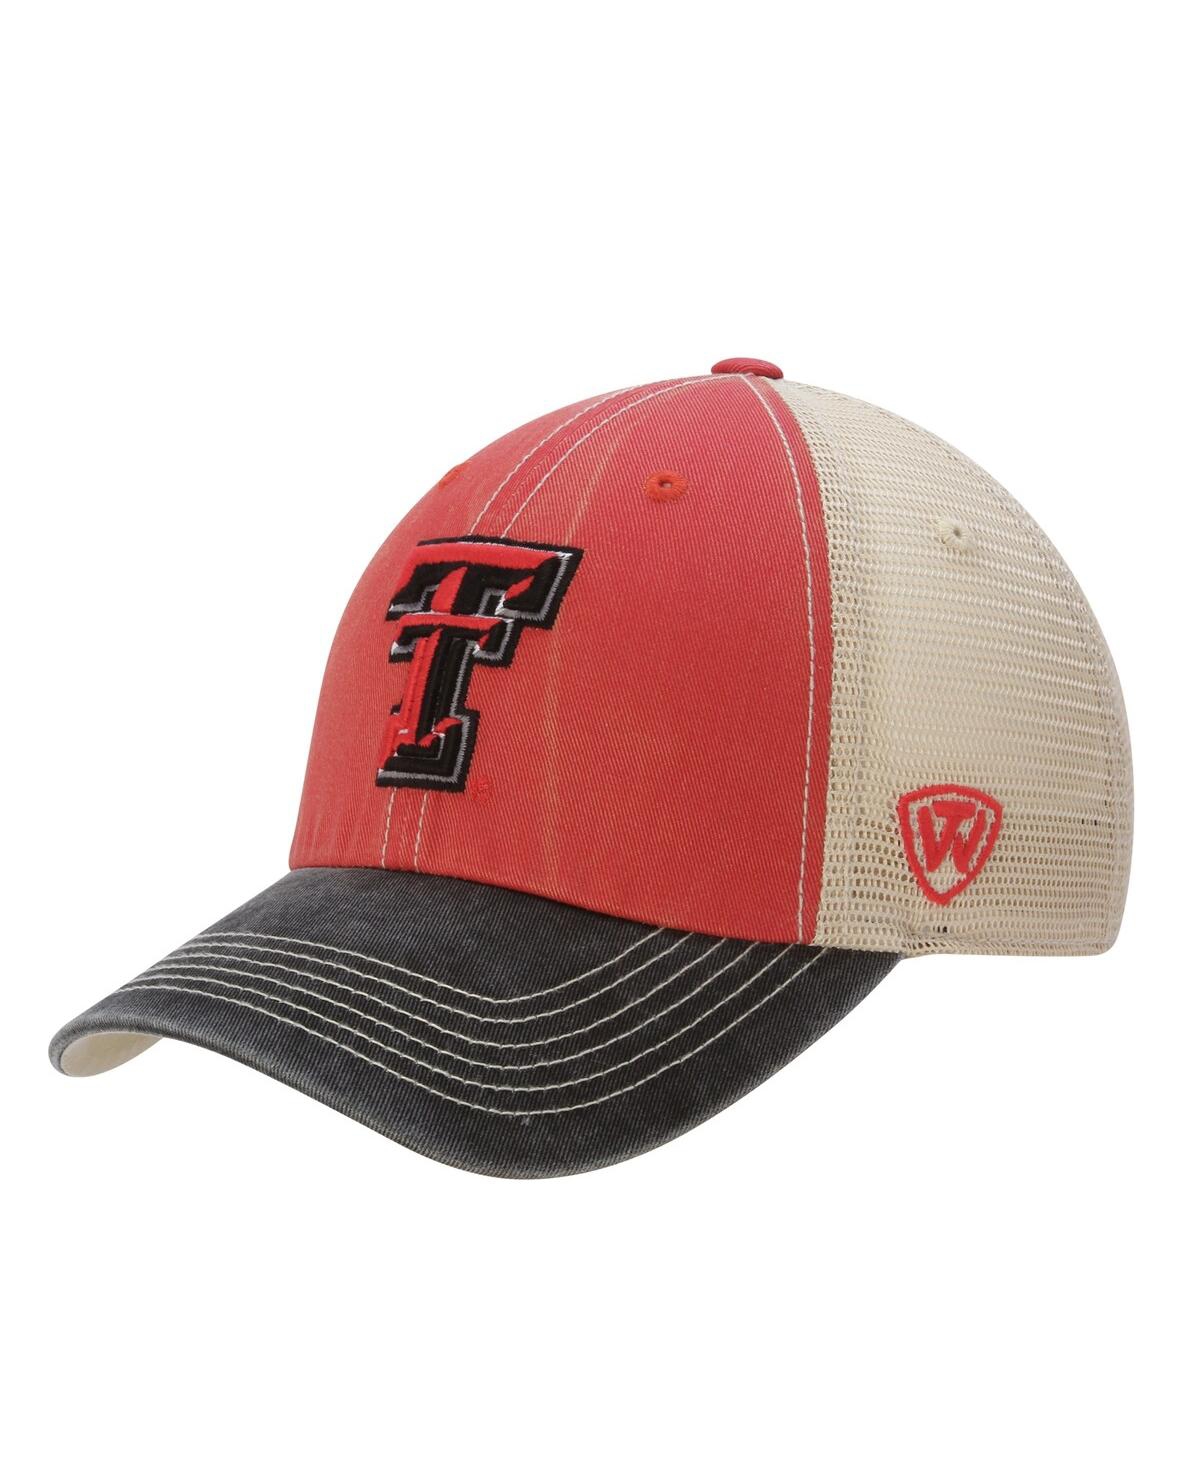 Shop Top Of The World Men's Texas Tech Red Raiders  Offroad Trucker Adjustable Hat